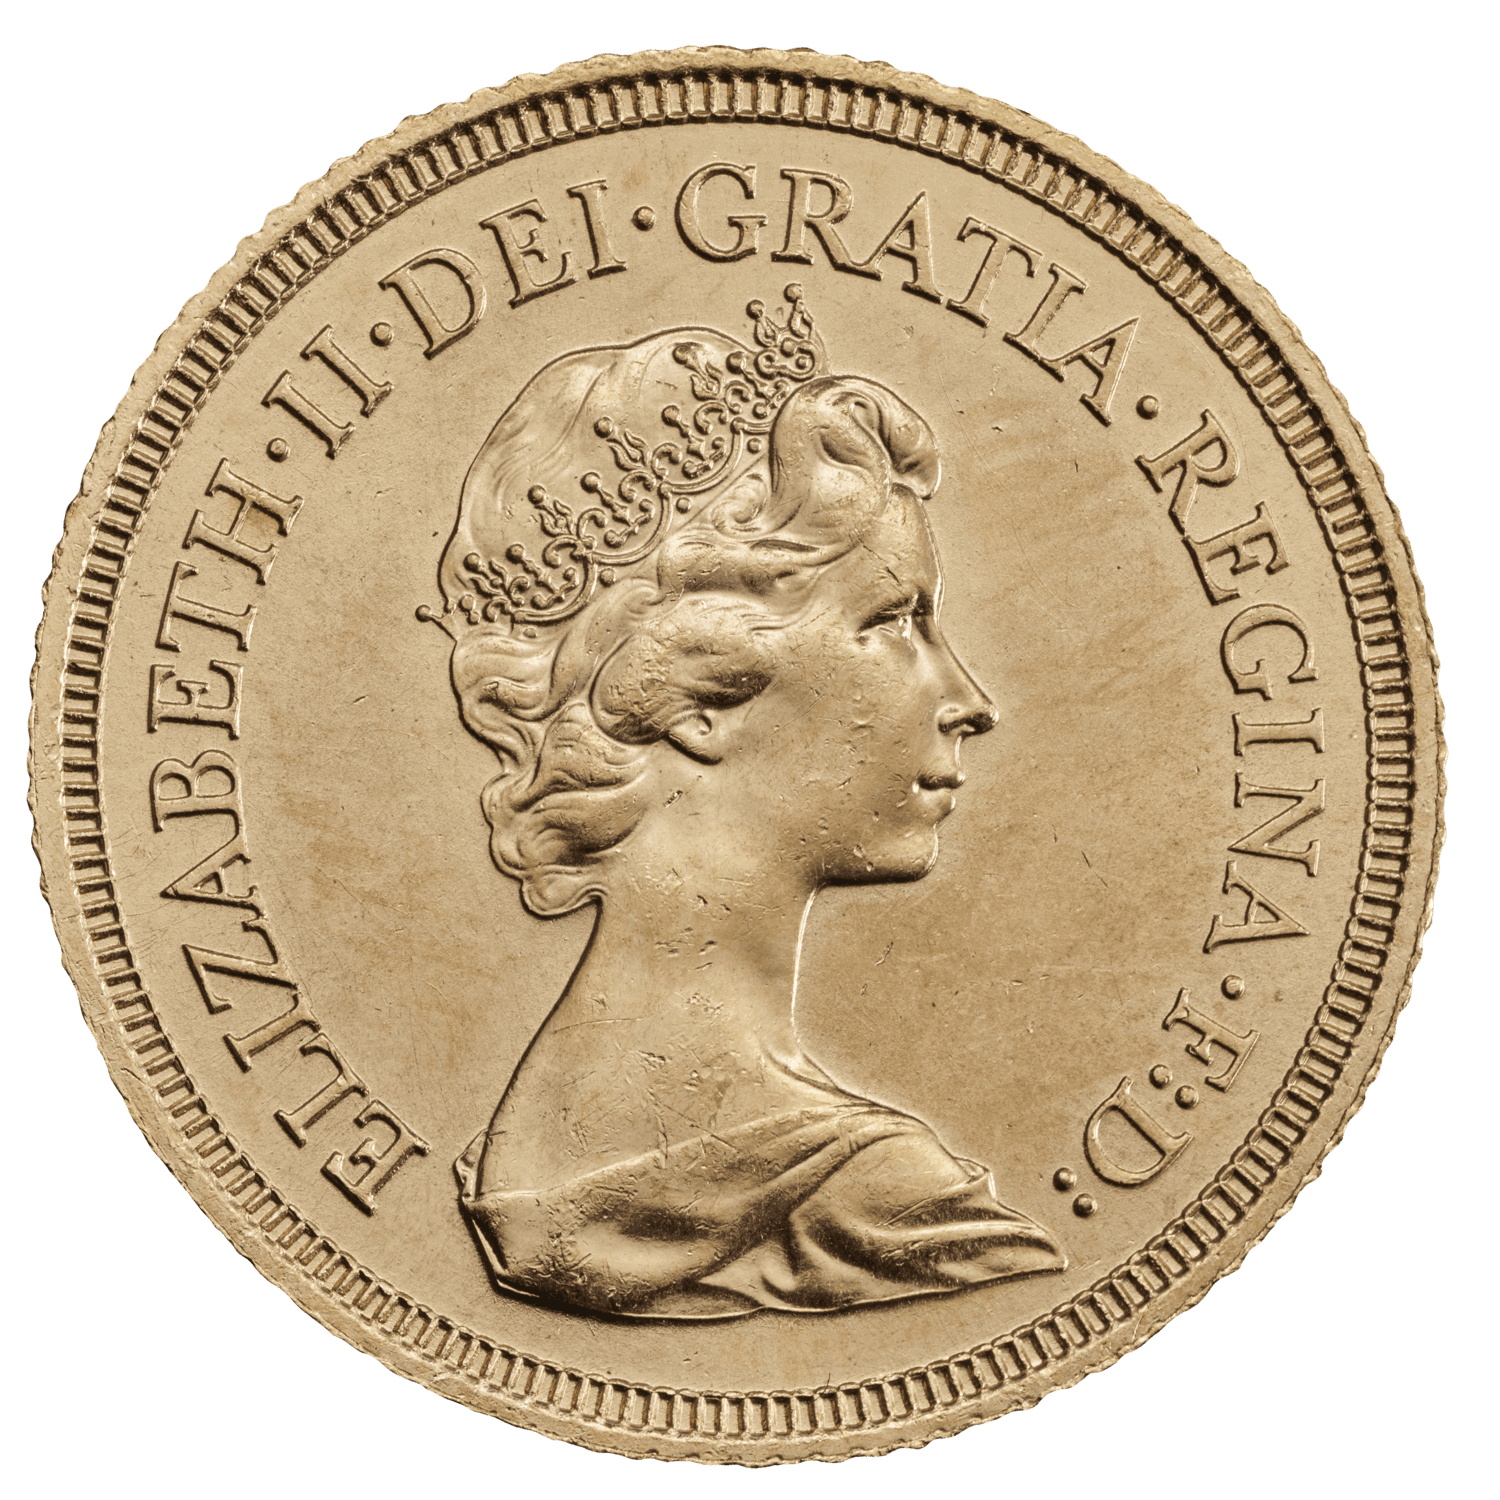 The Sovereign Best Value Elizabeth II Decimal Portrait Gold Bullion Coin